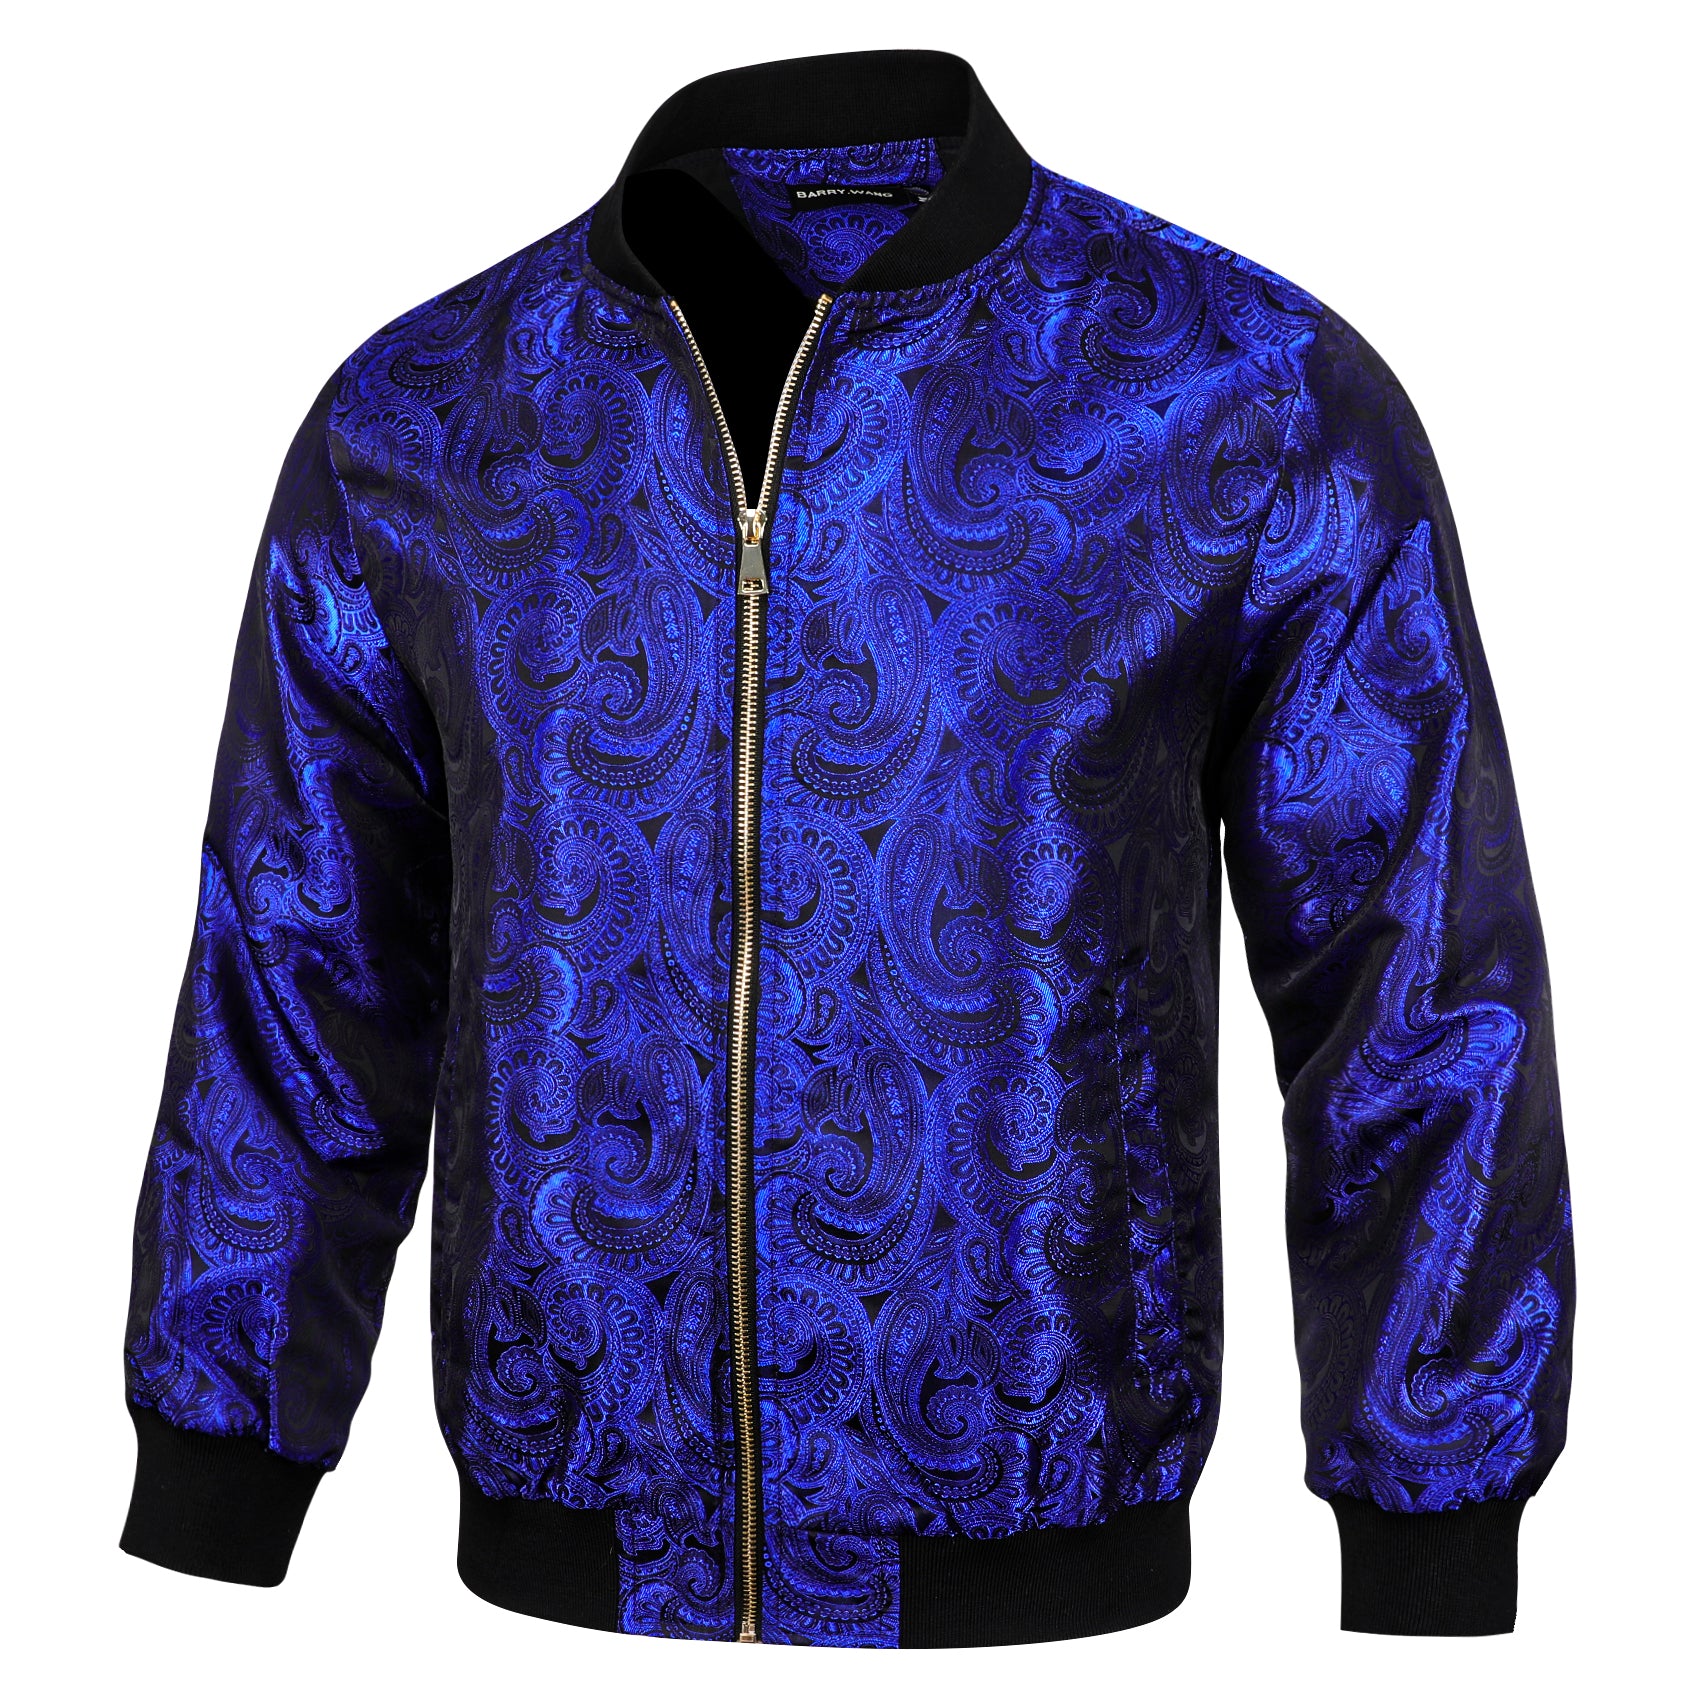 Barry.wang Men's Zipper Jacket Ultra Marine Floral Jacquard Paisley Jacket